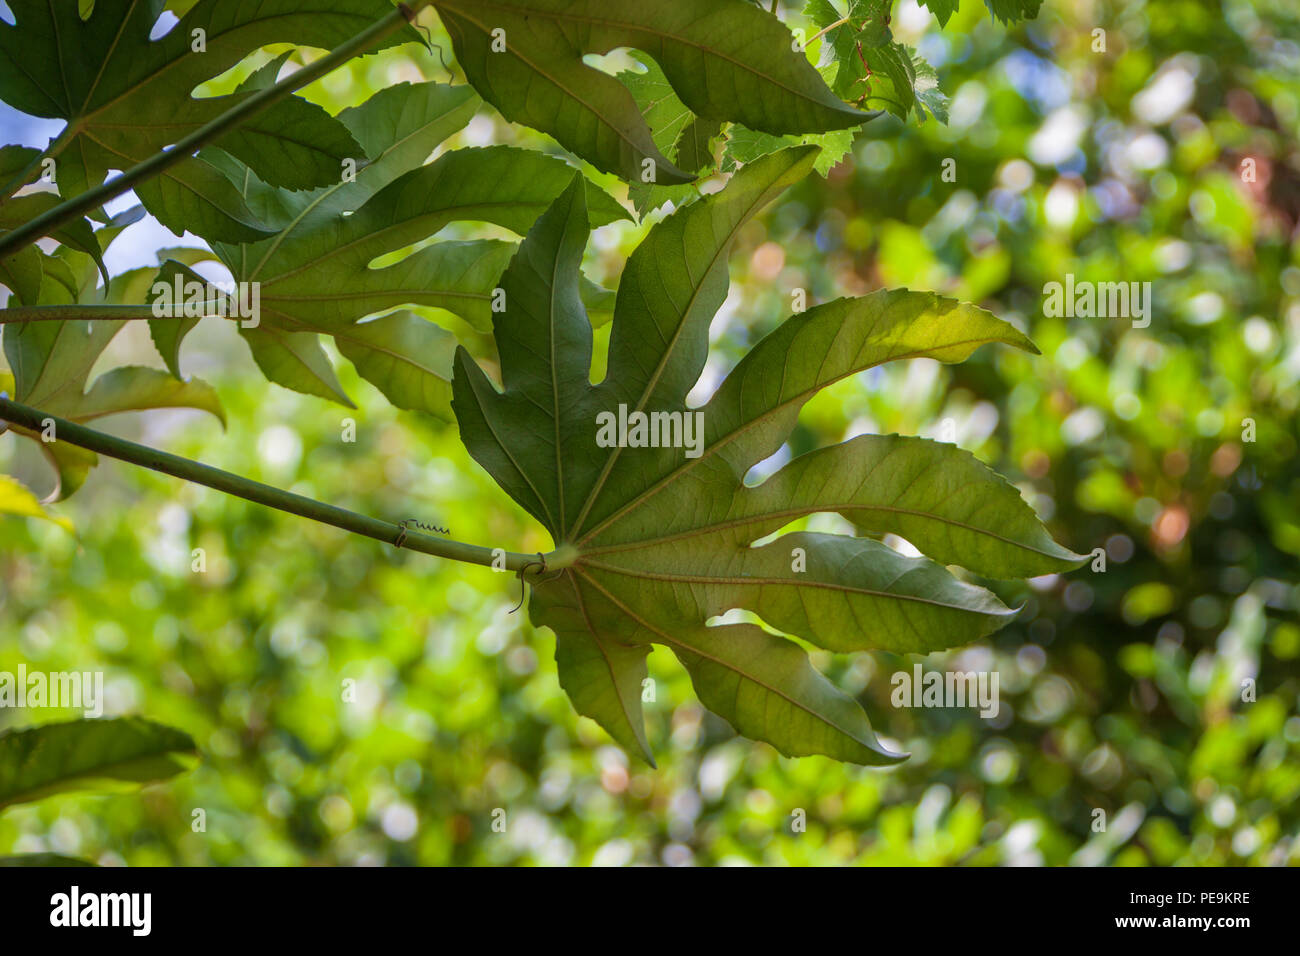 fatsia japonica leaf unerside Stock Photo